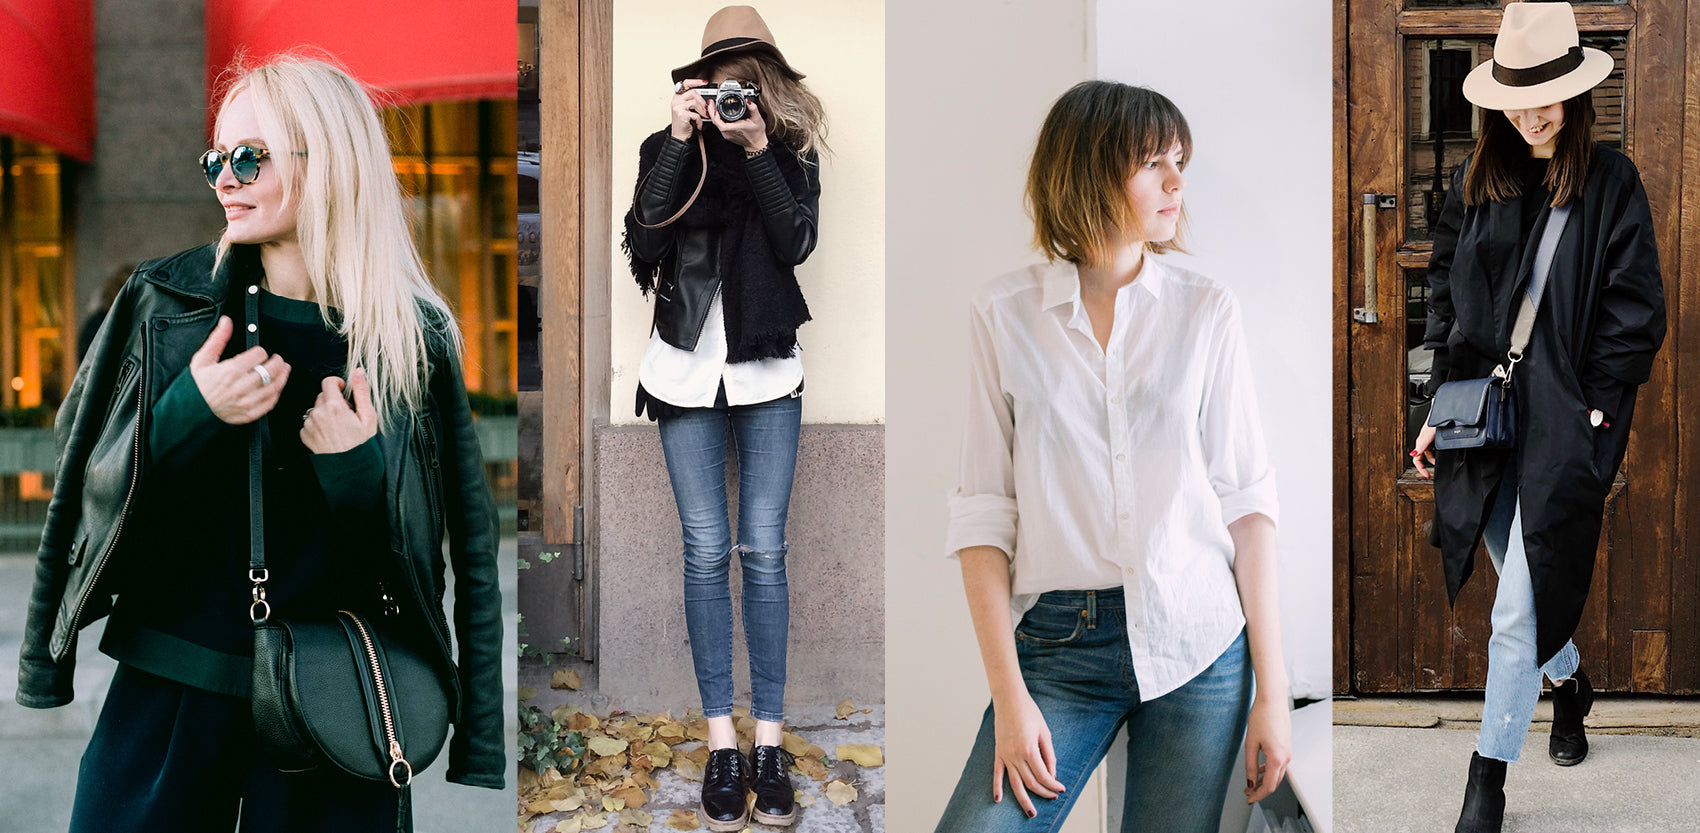 8 Best-kept Style Secrets Of Stylish Women  - How To Look More Stylish